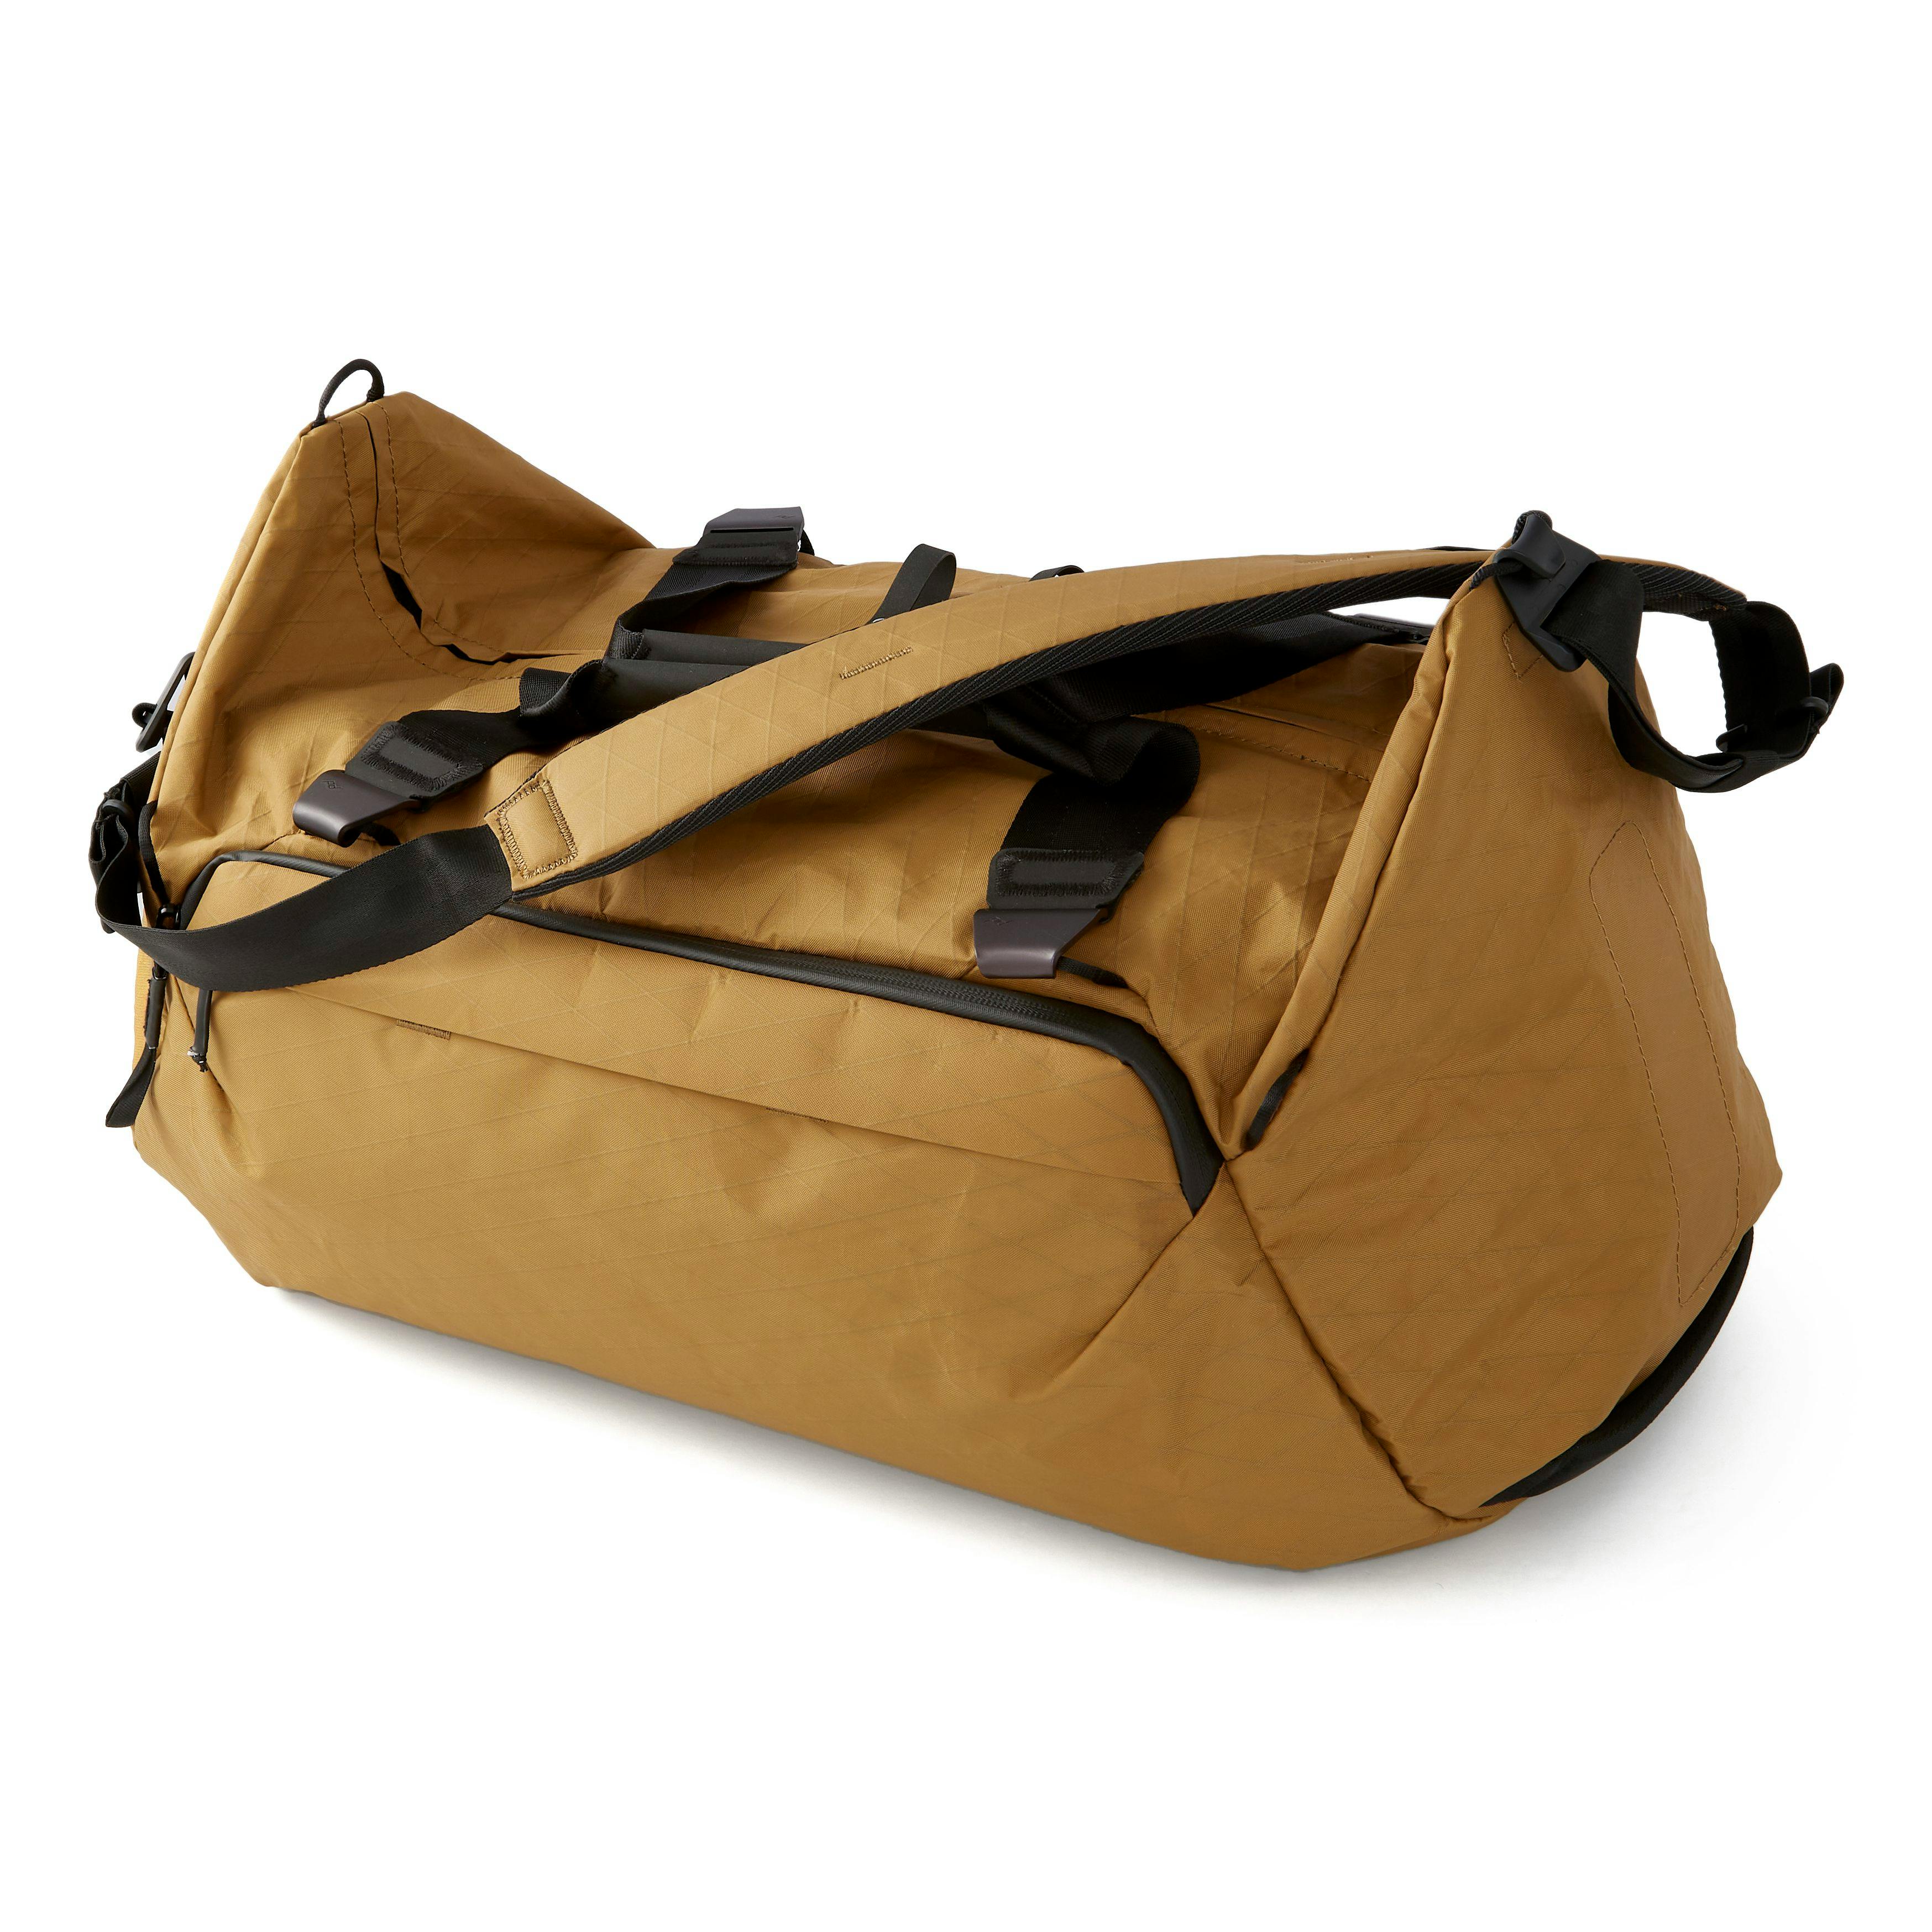 Peak Design Huckberry x Peak Design Travel Duffel Bag - 35L